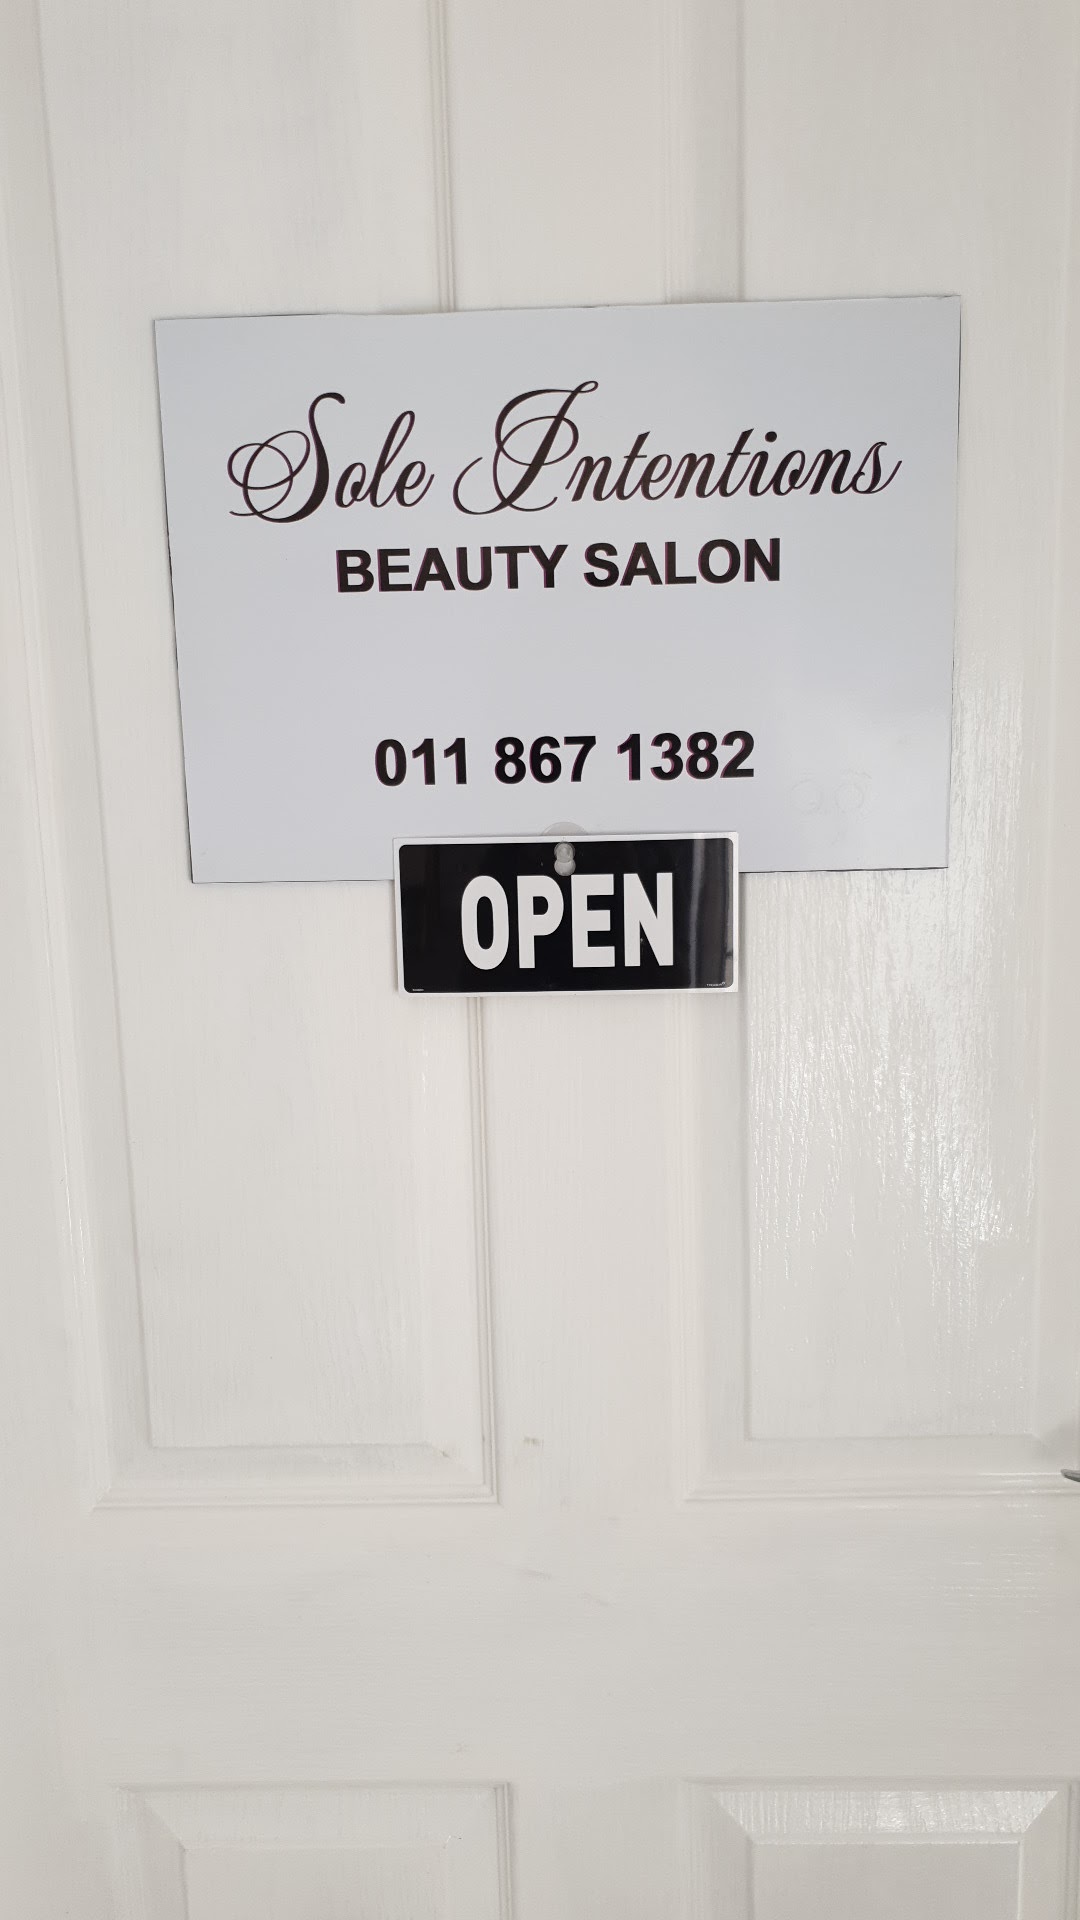 Sole Intentions Beauty Salon